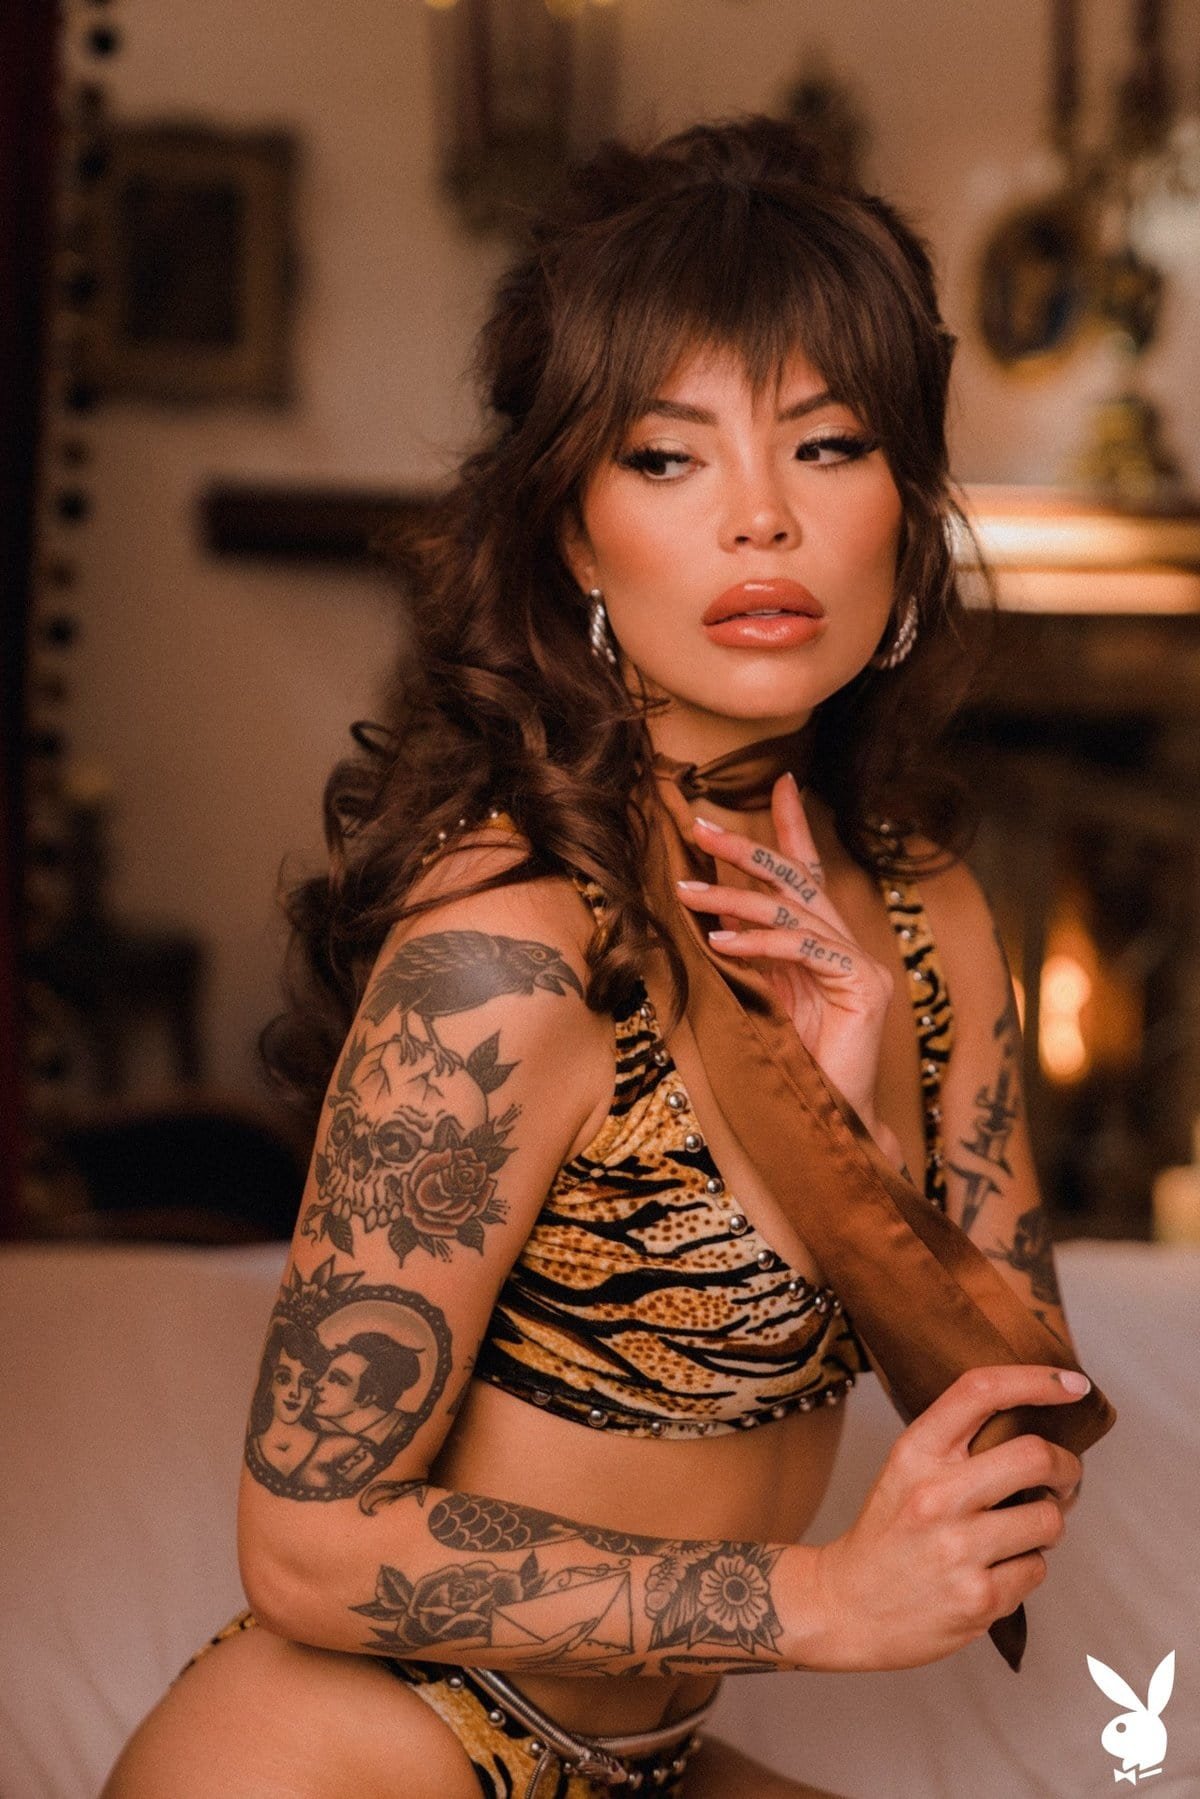 Emma Jade exposes her sexy tattooed body on the sofa